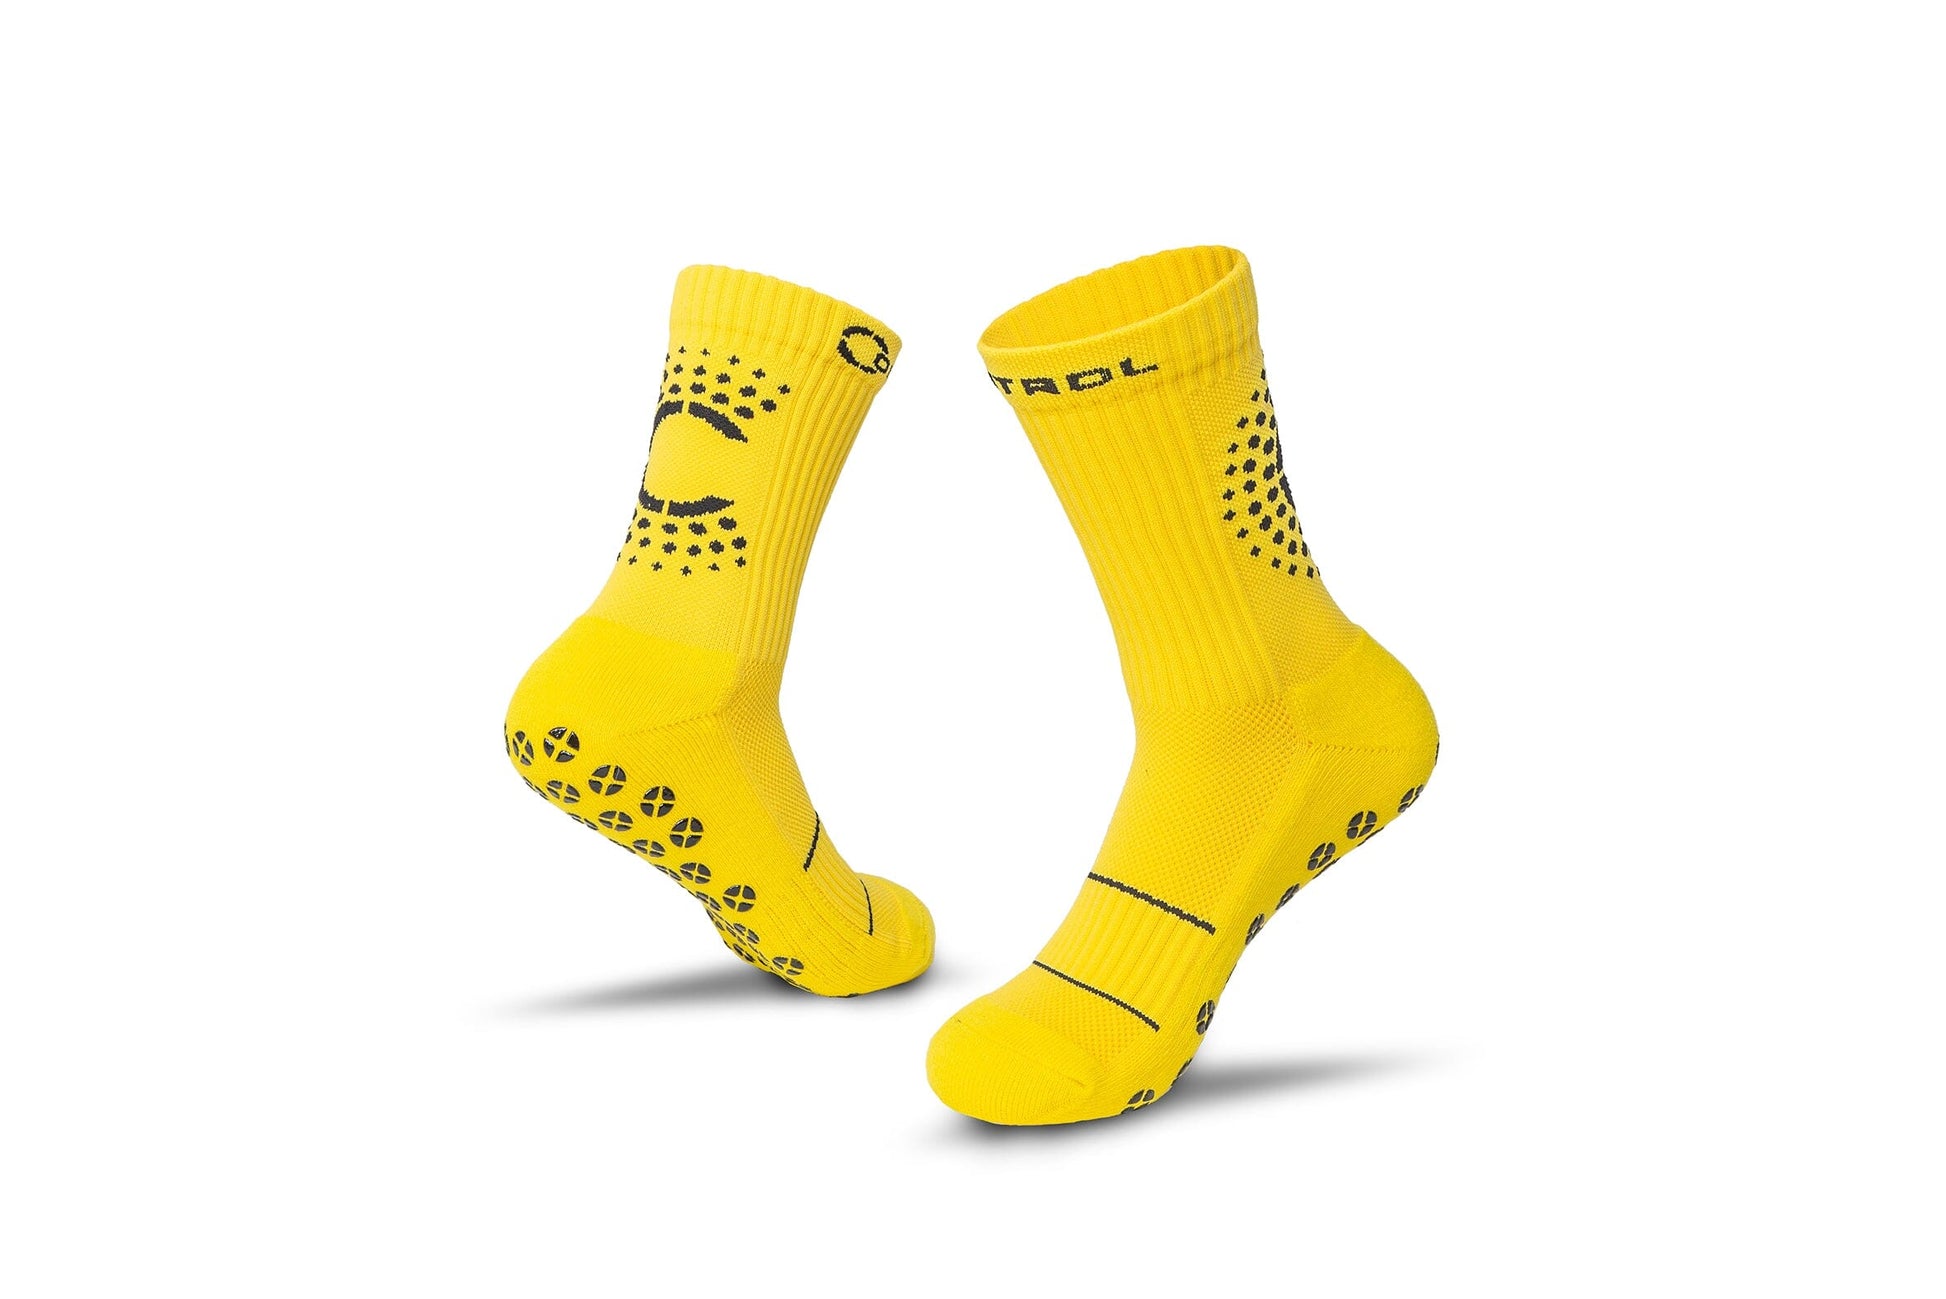 Control Sox 2.0 - Yellow Grip Socks Control Sox S/M (US 5-8.5) 